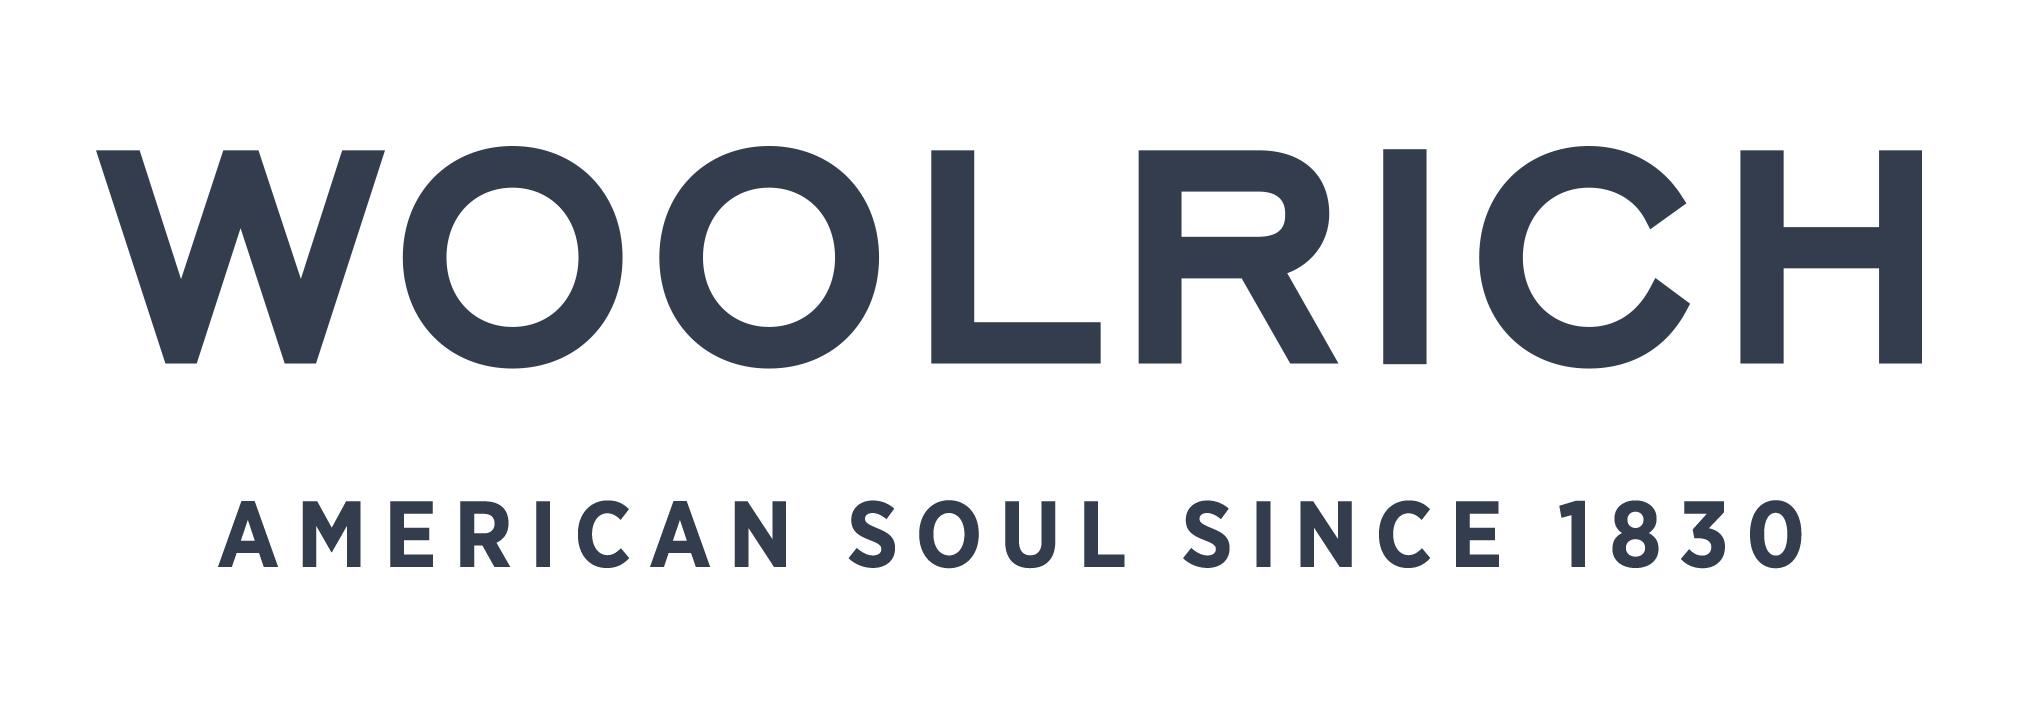 Woolrich Logo - Woolrich Soul Collaboration